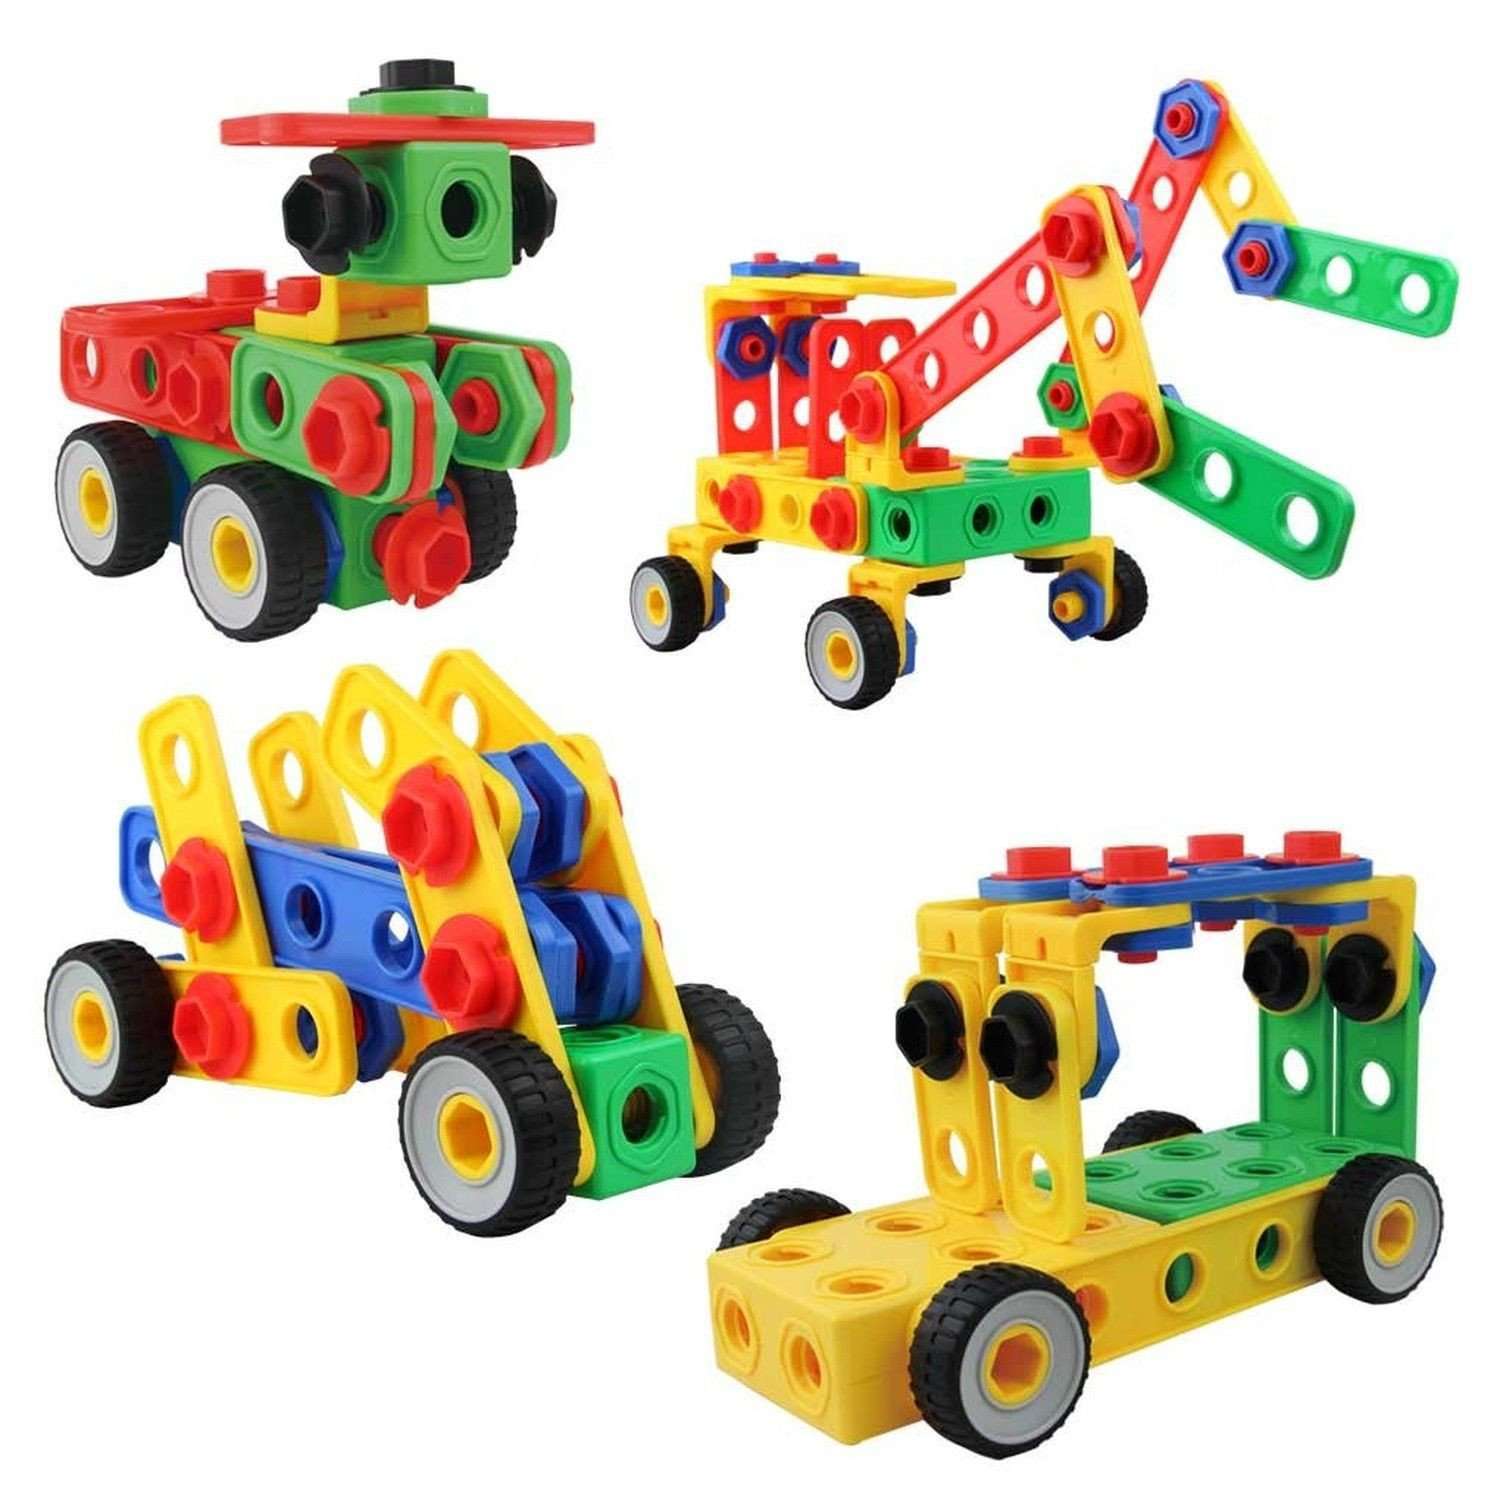 Educational Toys Construction Engineering Blocks By Eti Toys For Boys ...